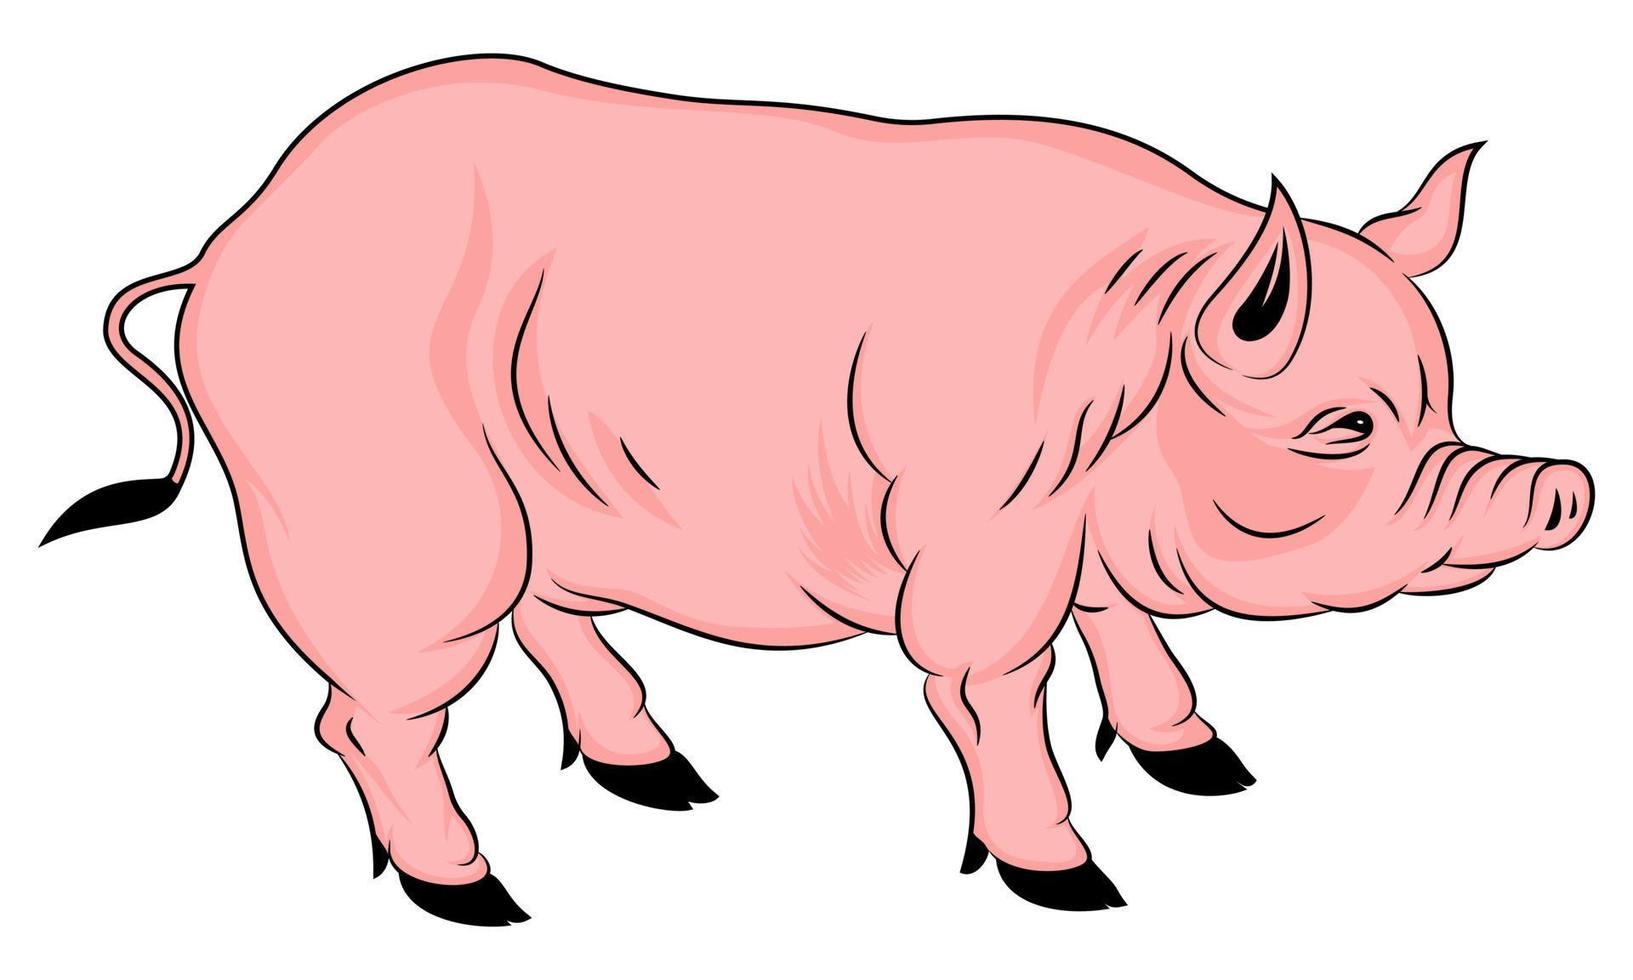 jordbruk gris vektor illustration - odla, inhemsk djur- gris